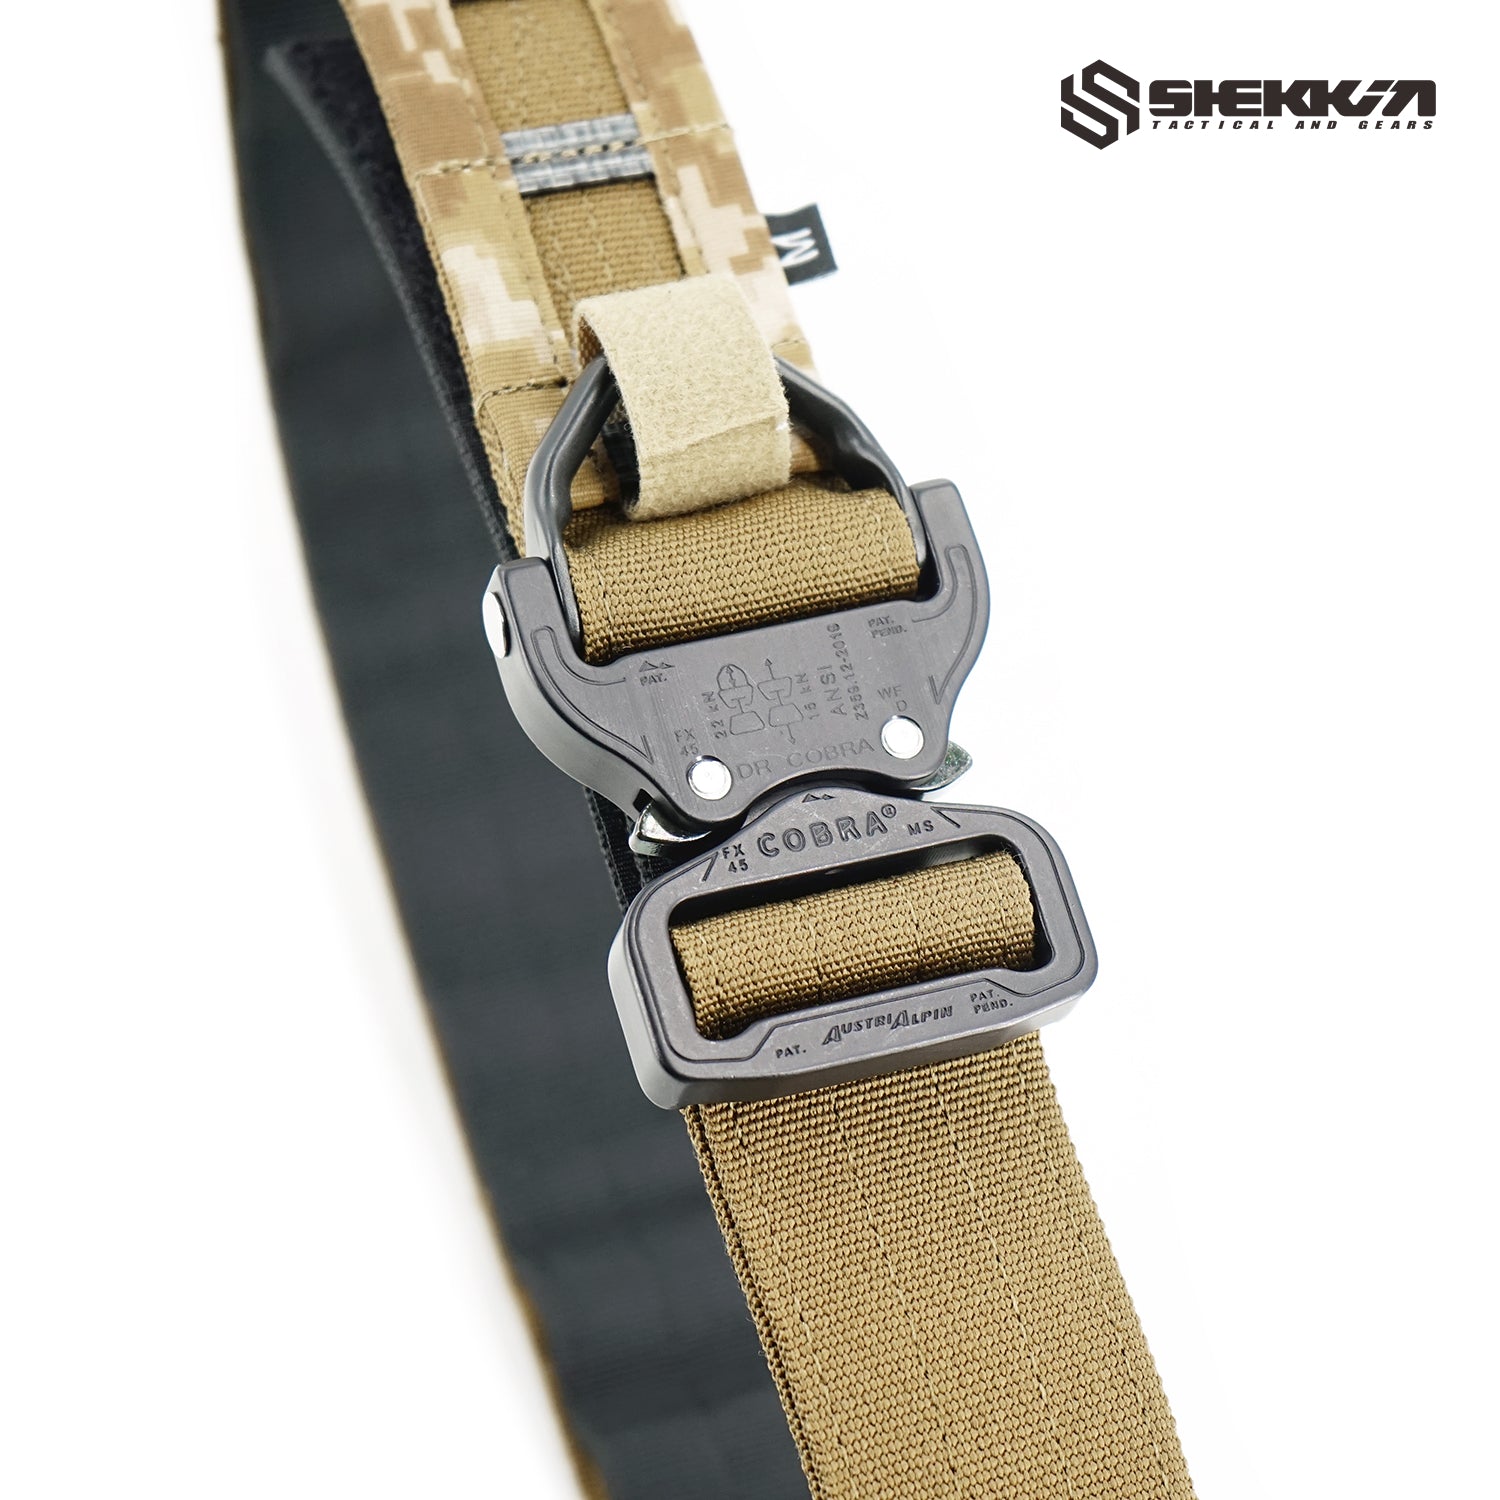 GBRS Style tactical belt - Shekkin Gears